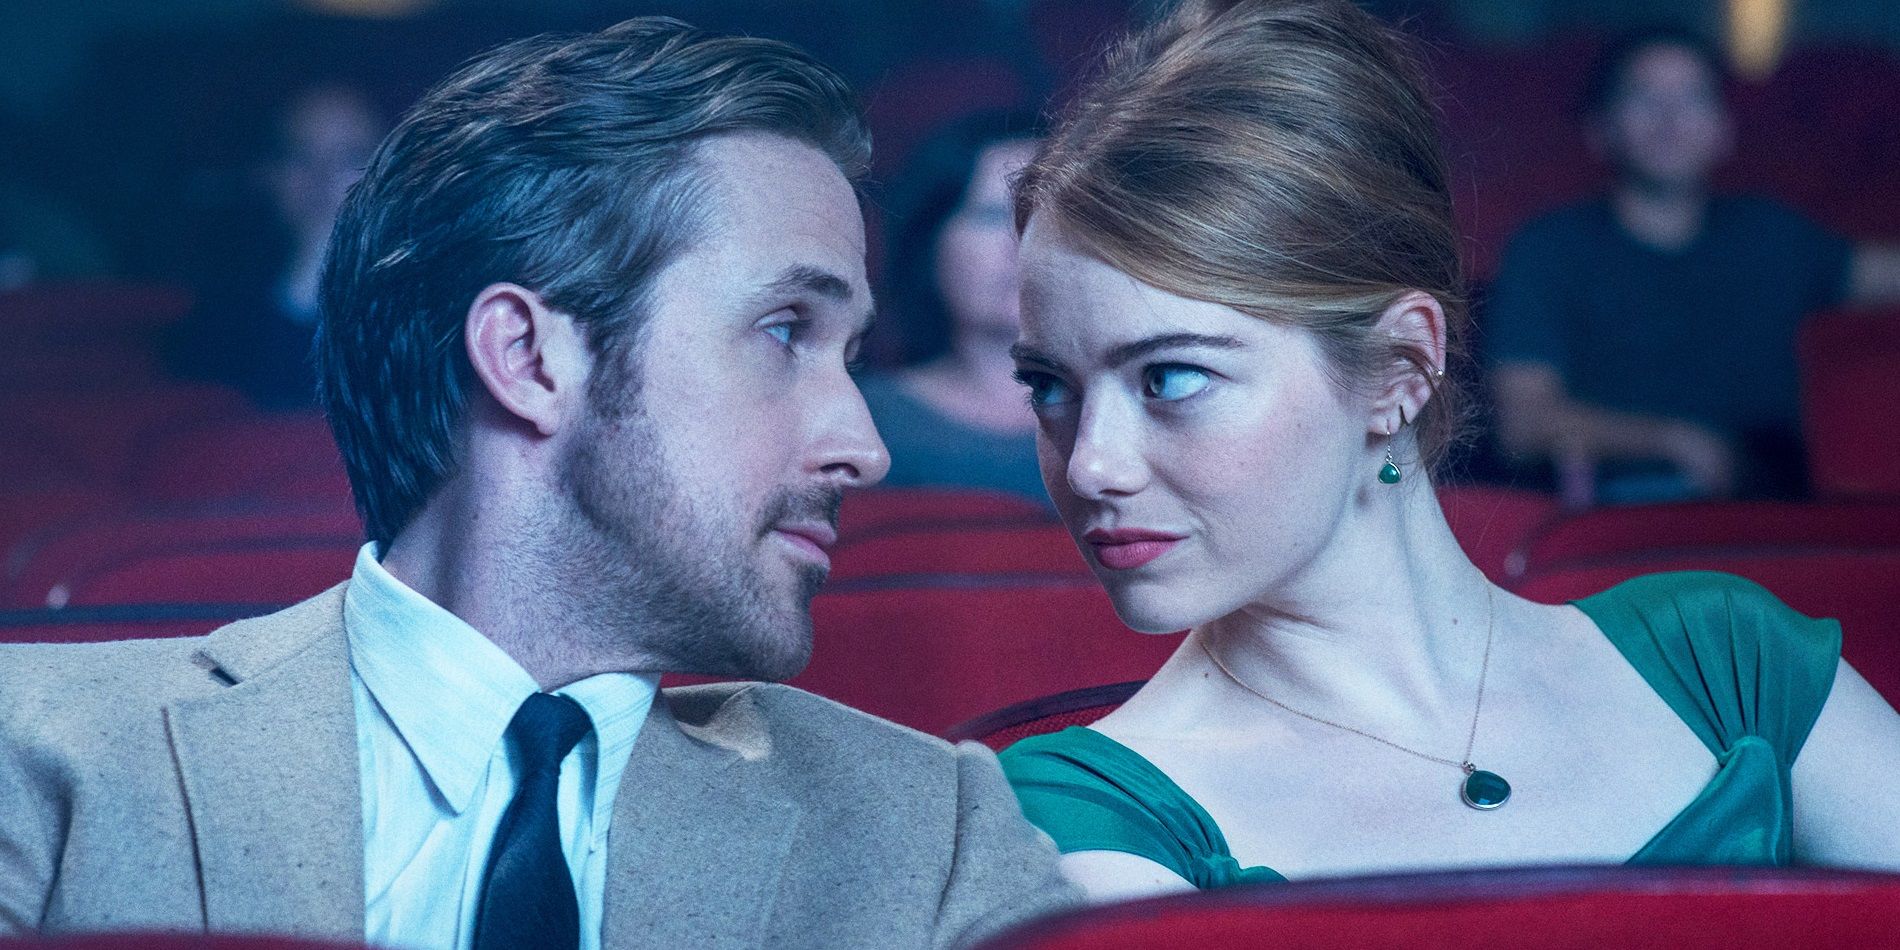 Ryan Gosling and Emma Stone in a movie theater in La La Land